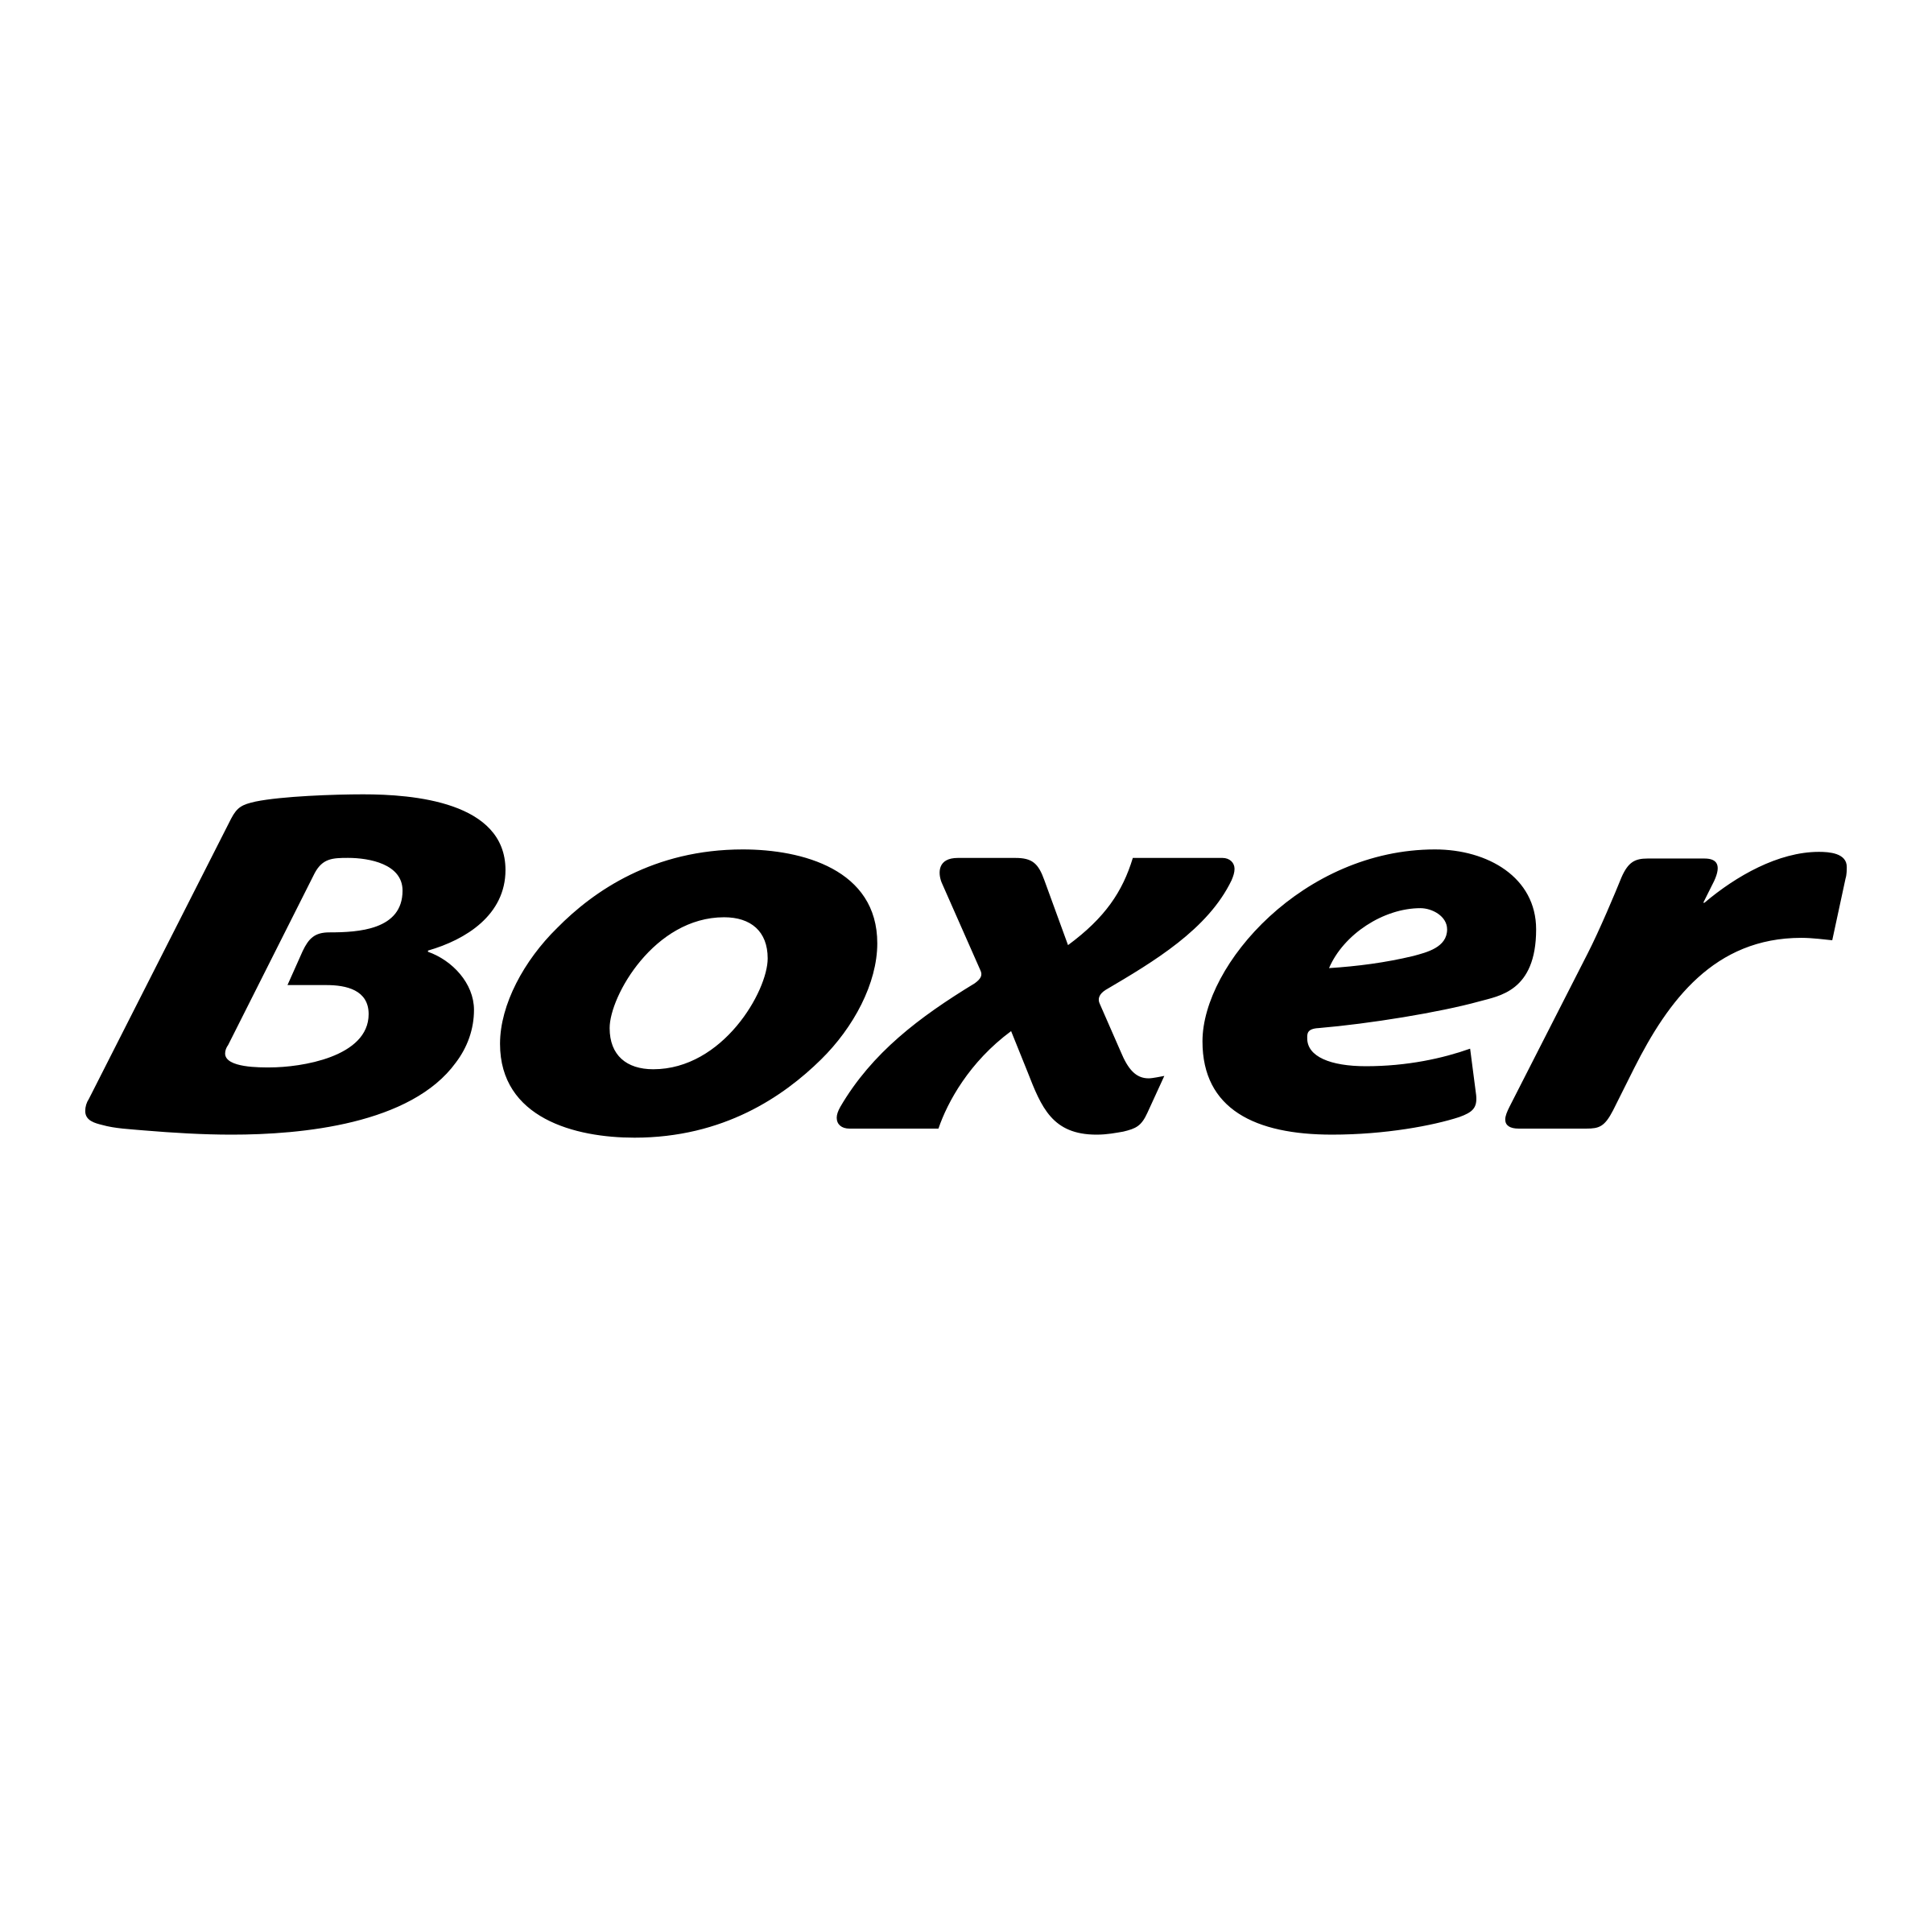 Boxer Logo - Peugeot Boxer Logo PNG Transparent & SVG Vector - Freebie Supply